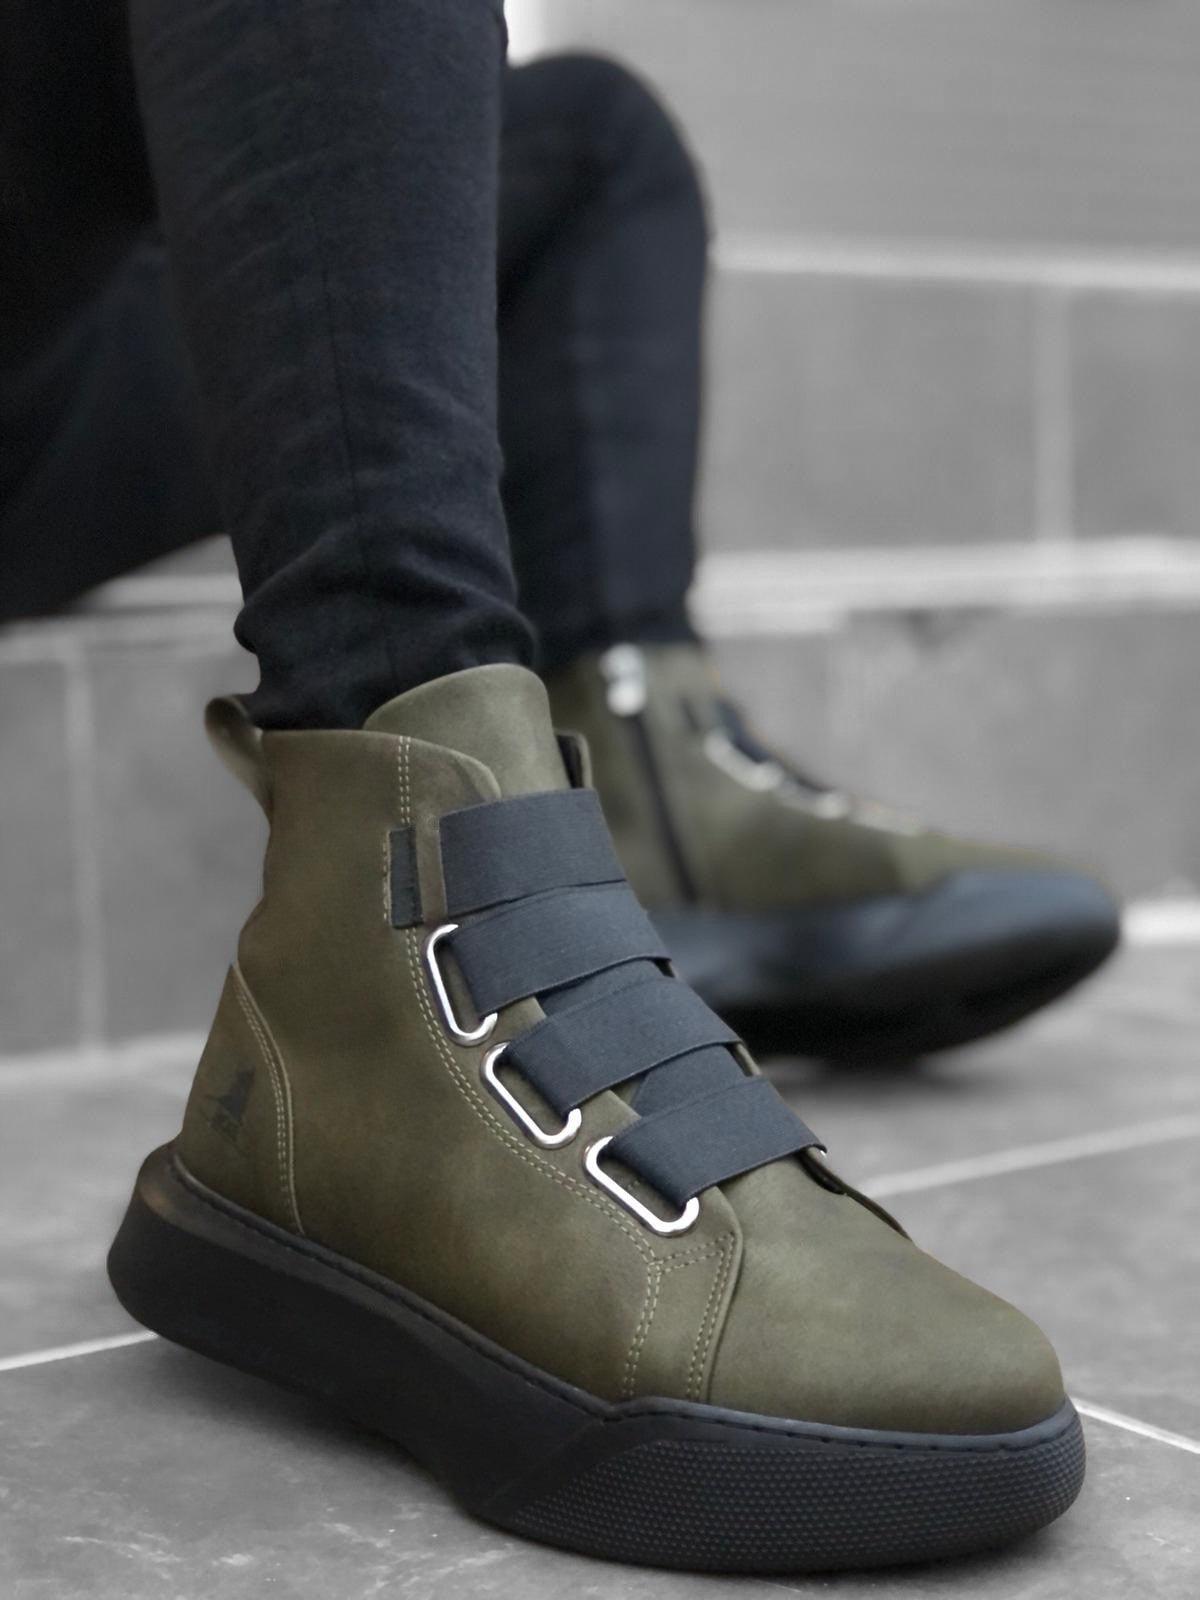 BA0142 Banded Men's High Sole Black Sport Boots - Men Fashion Sneaker Shoes Men's Sneaker Boots - STREET MODE ™